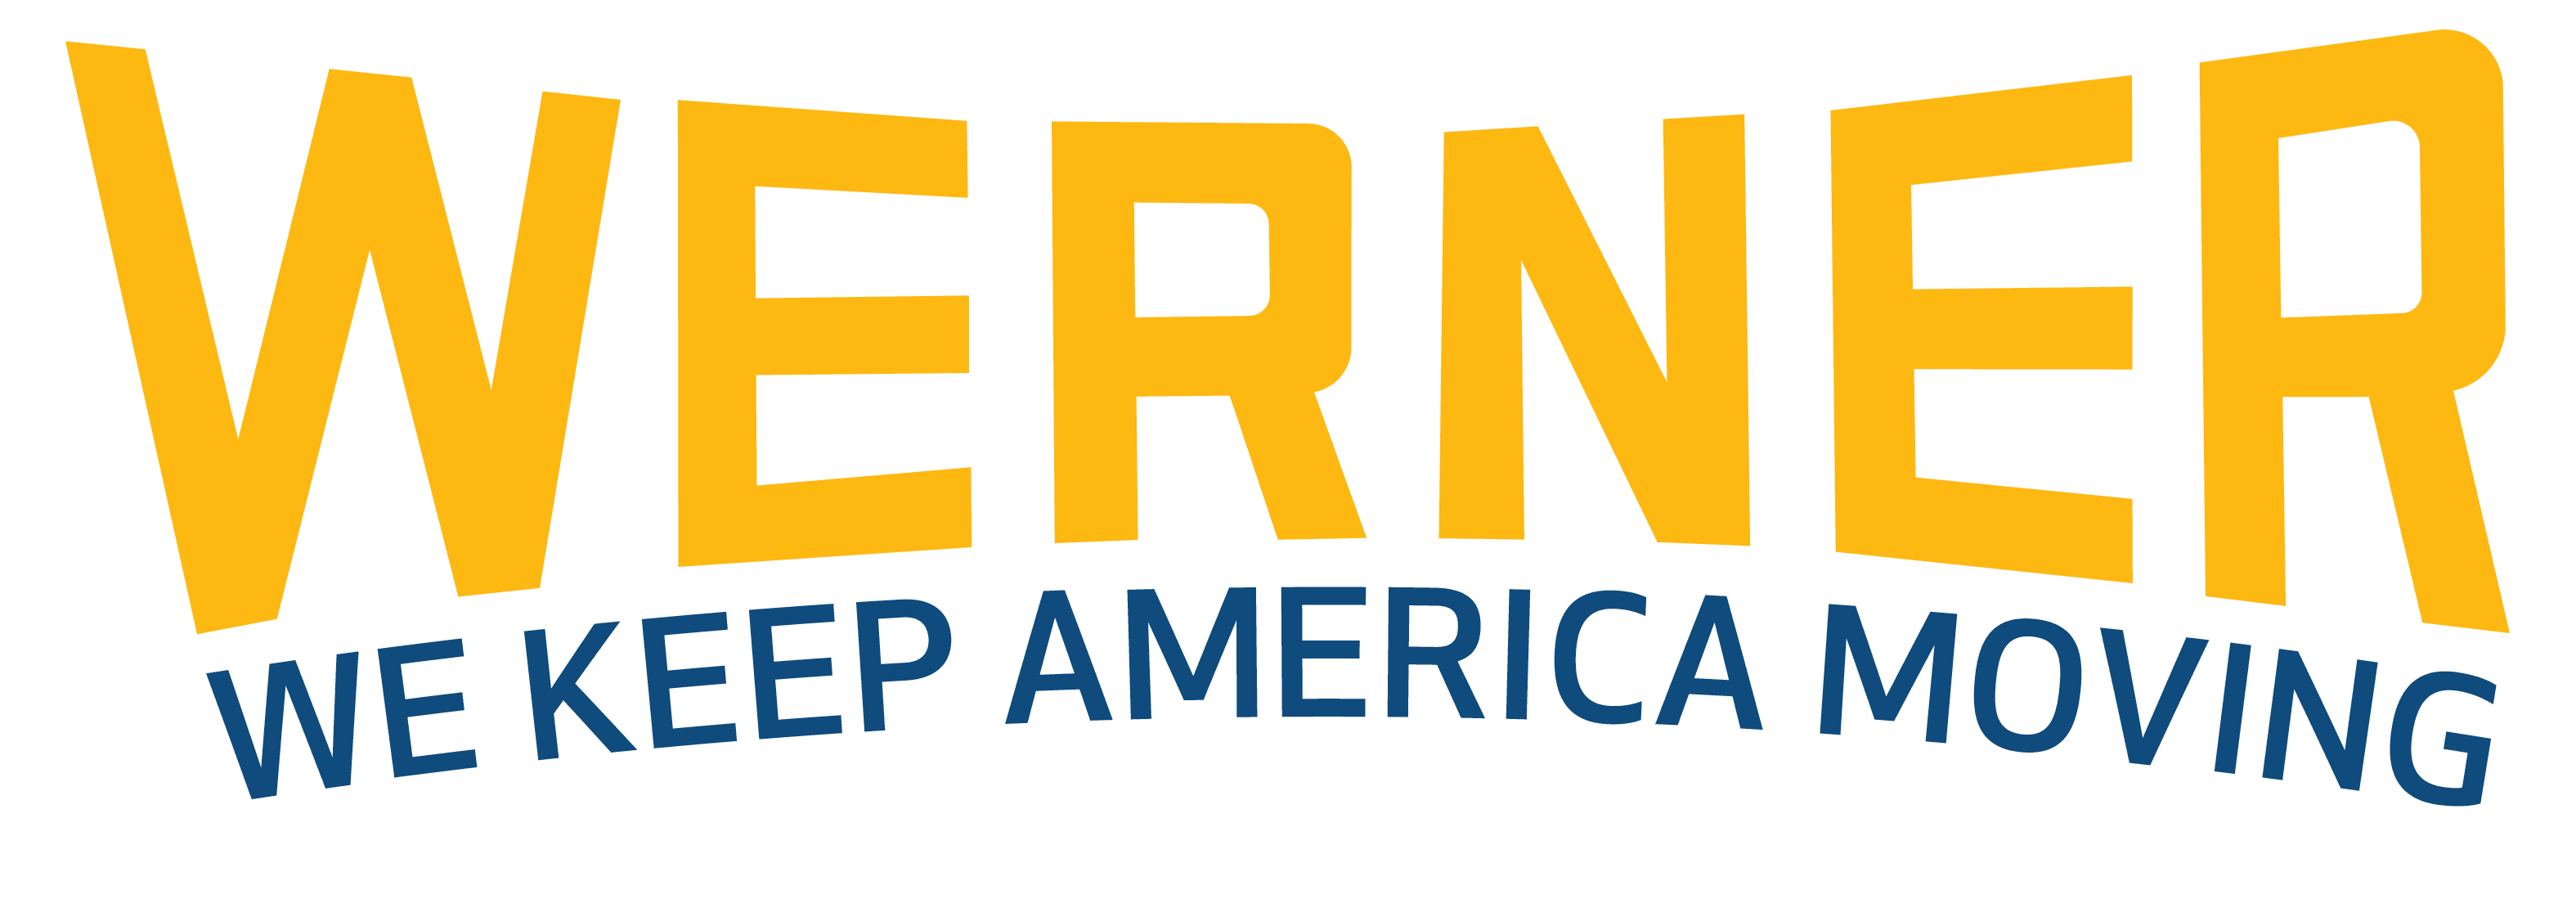 Werner Logo - Werner Enterprises Company Review And Profile